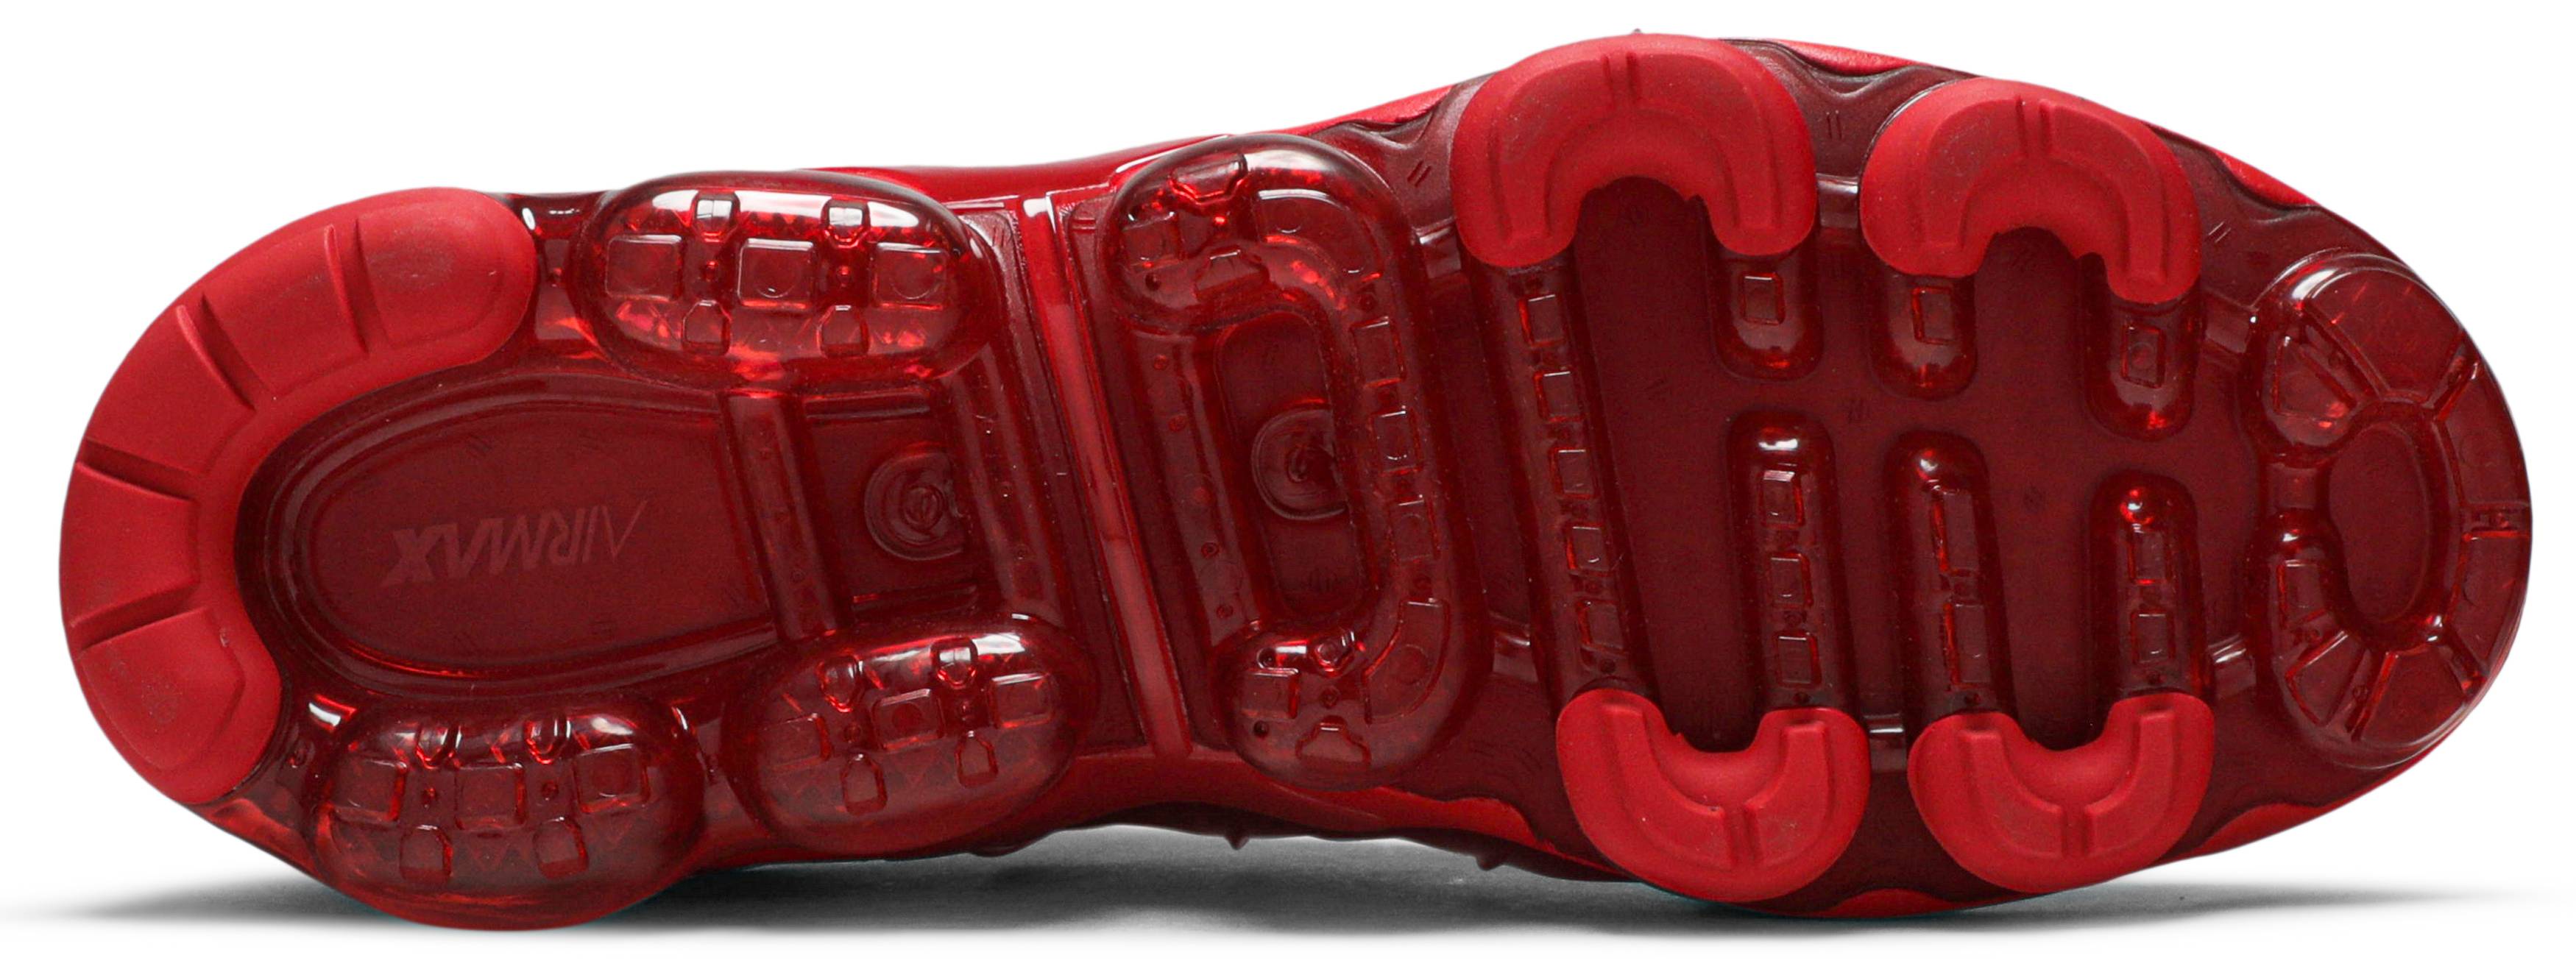 Air VaporMax Plus 'Triple Red' - Nike - CW6973 600 | GOAT